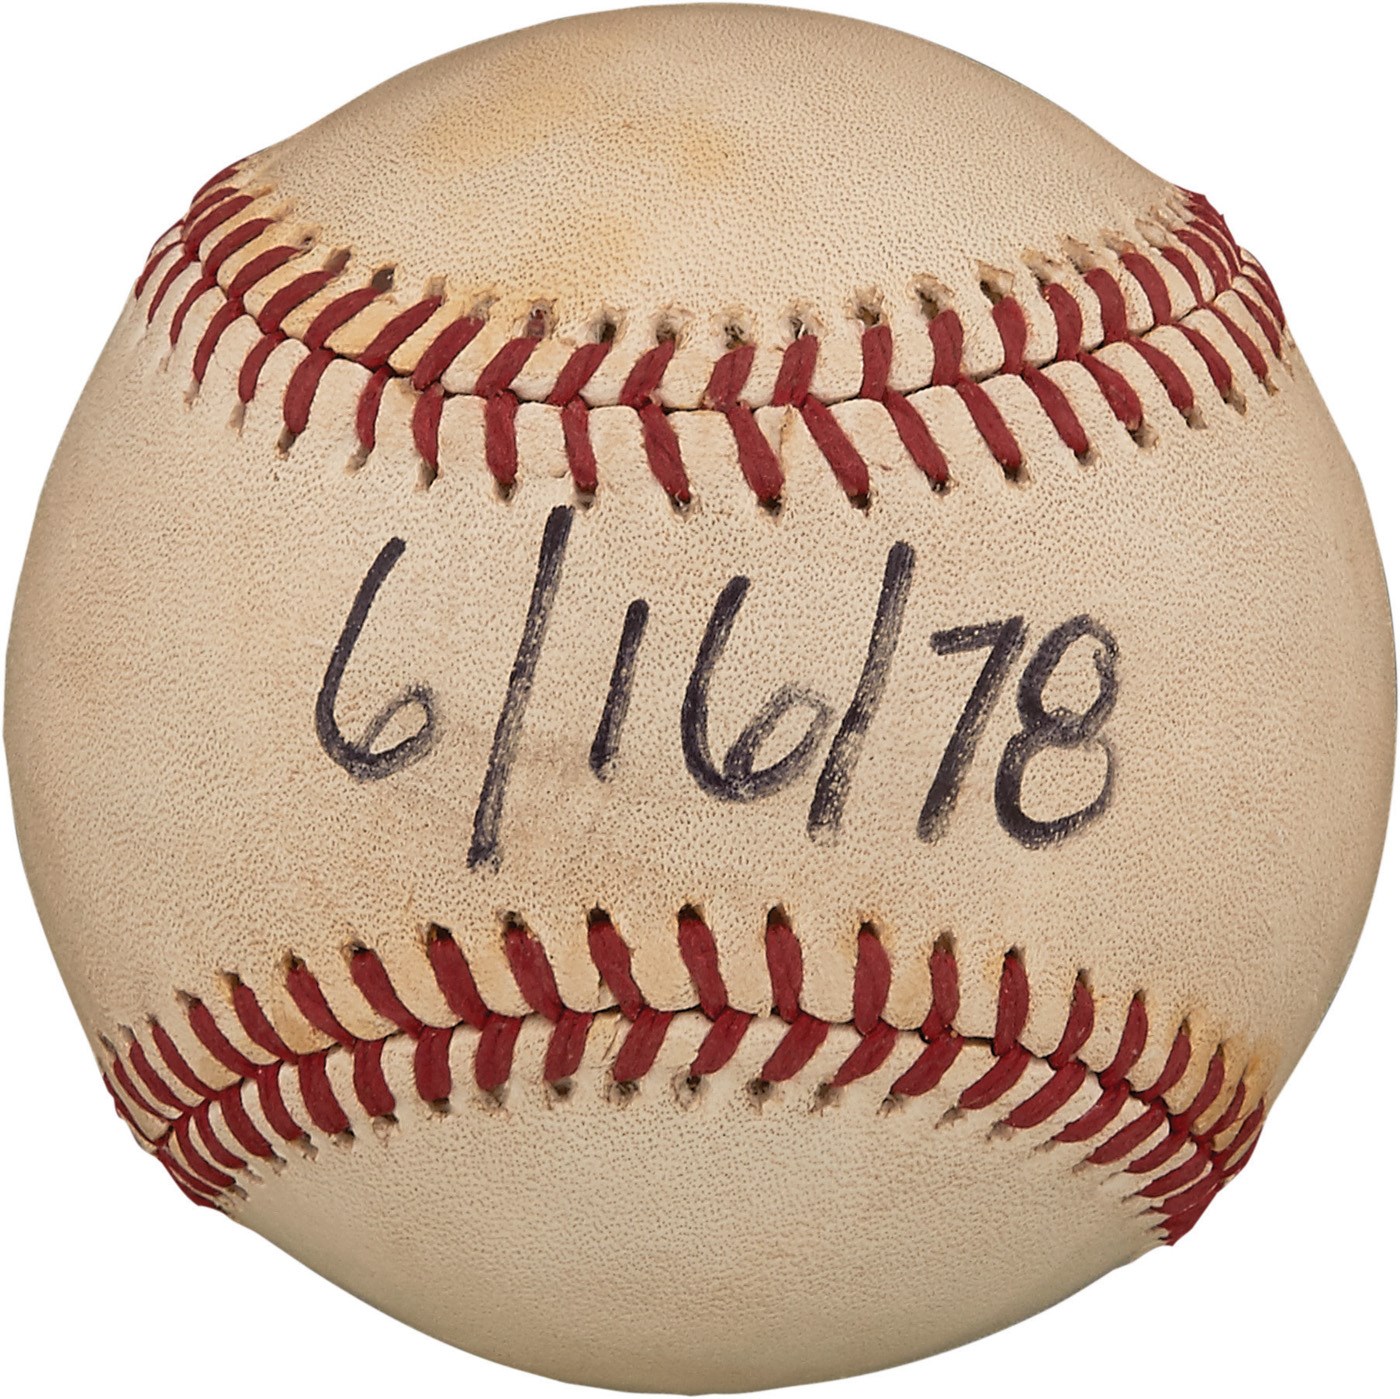 Pete Rose & Cincinnati Reds - 1978 Tom Seaver No-Hit Baseball from Cincinnati Reds Gift Shop (LOA)